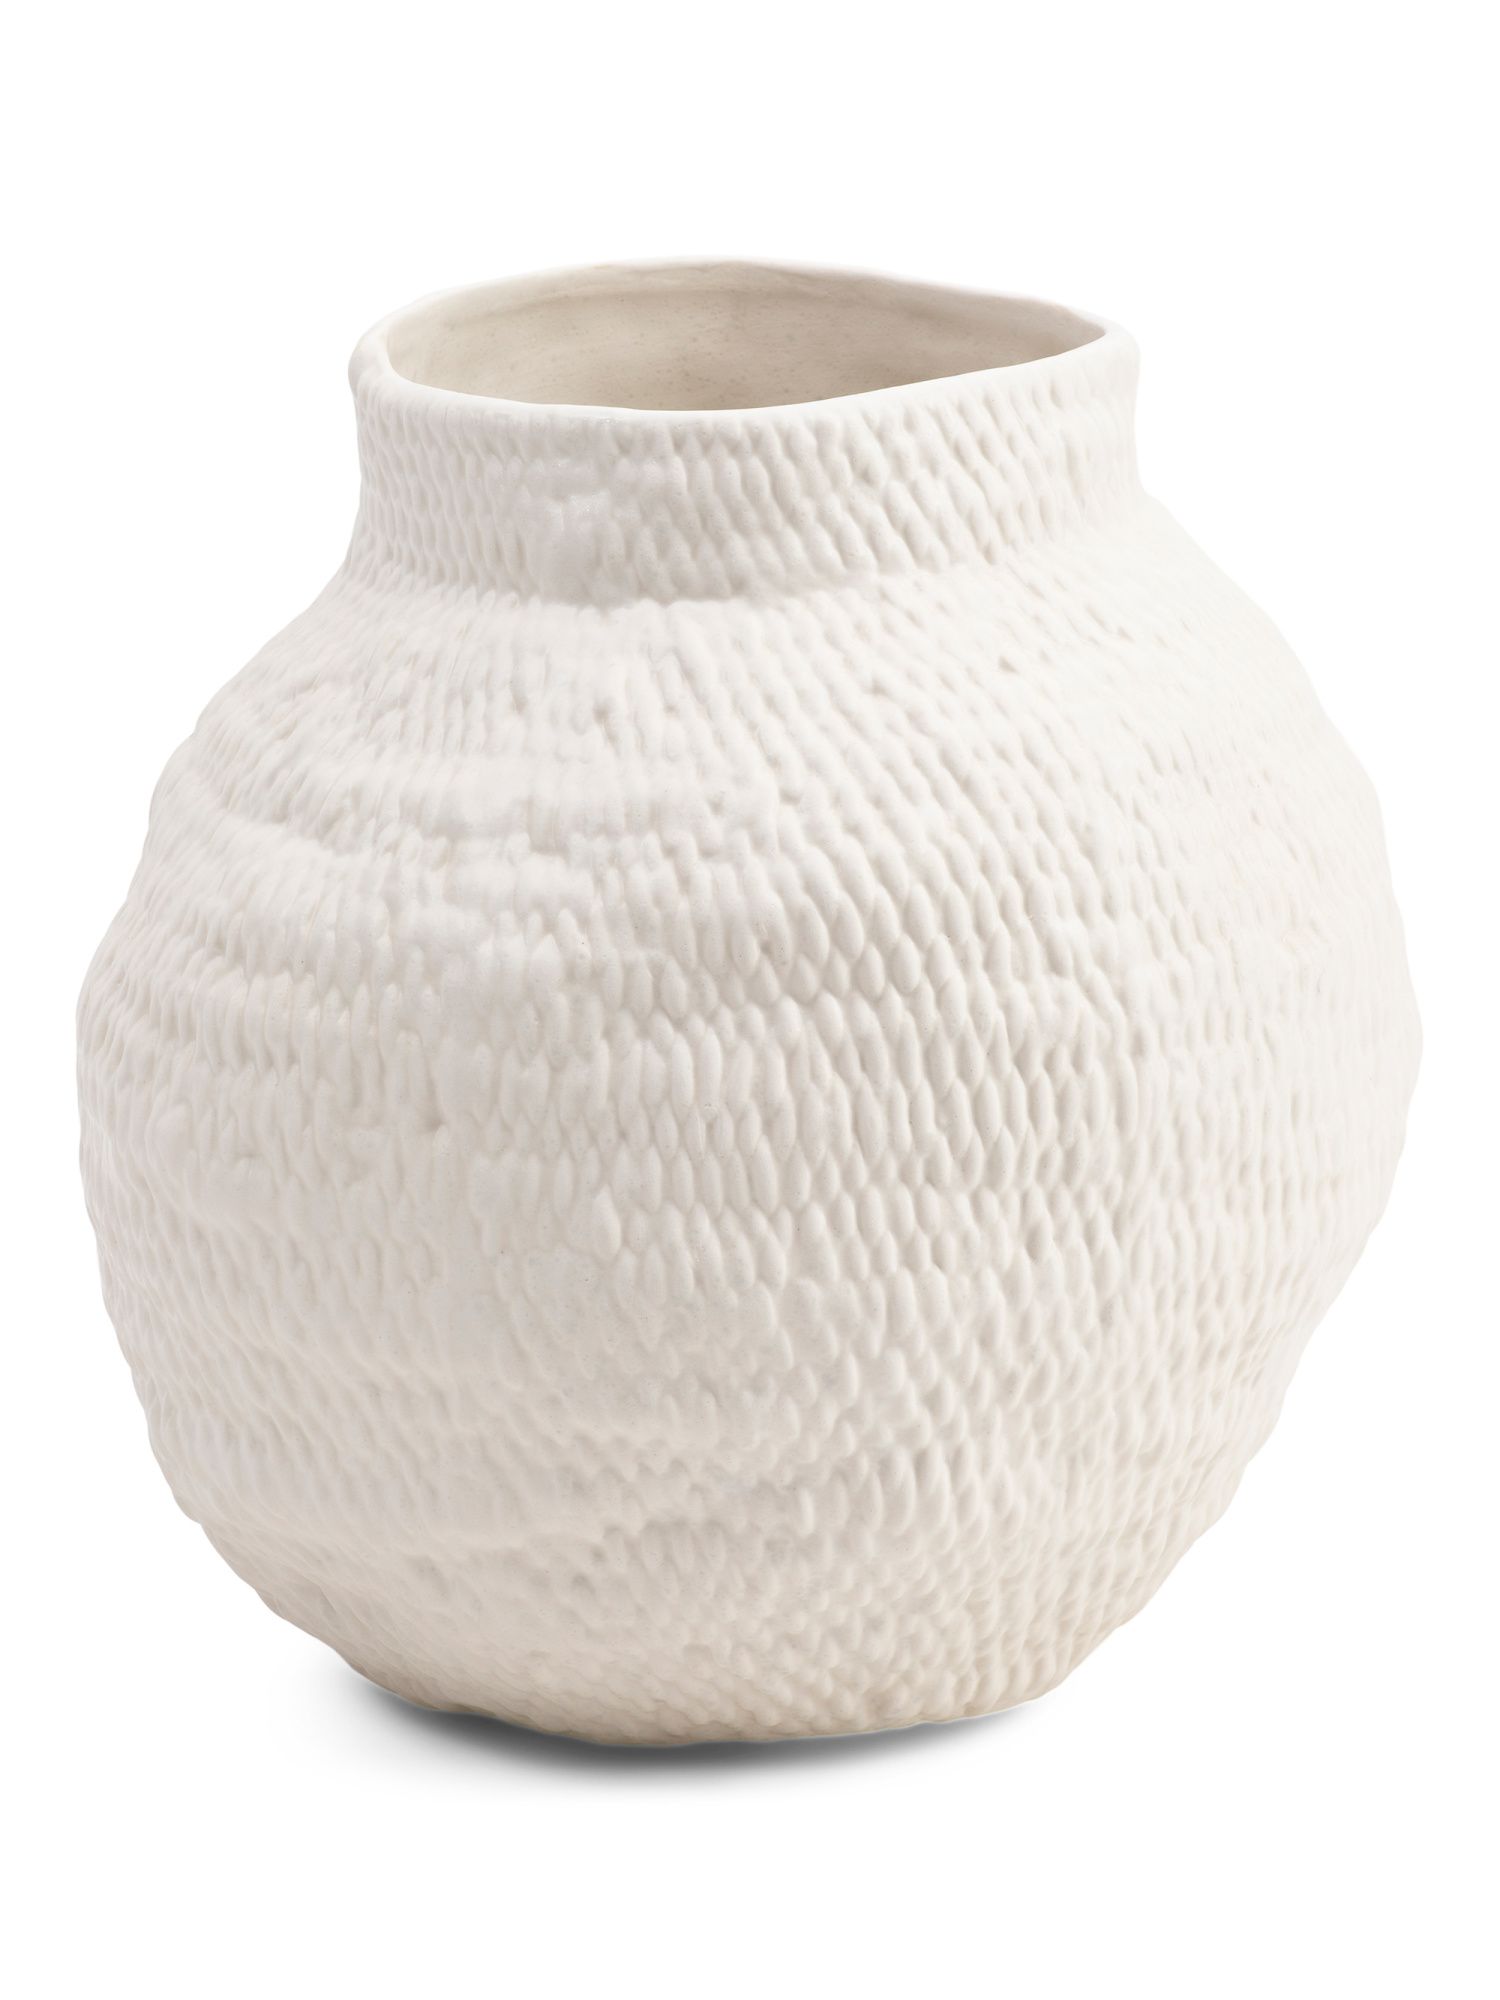 Made In Portugal Organic Basket Ceramic Vase | TJ Maxx